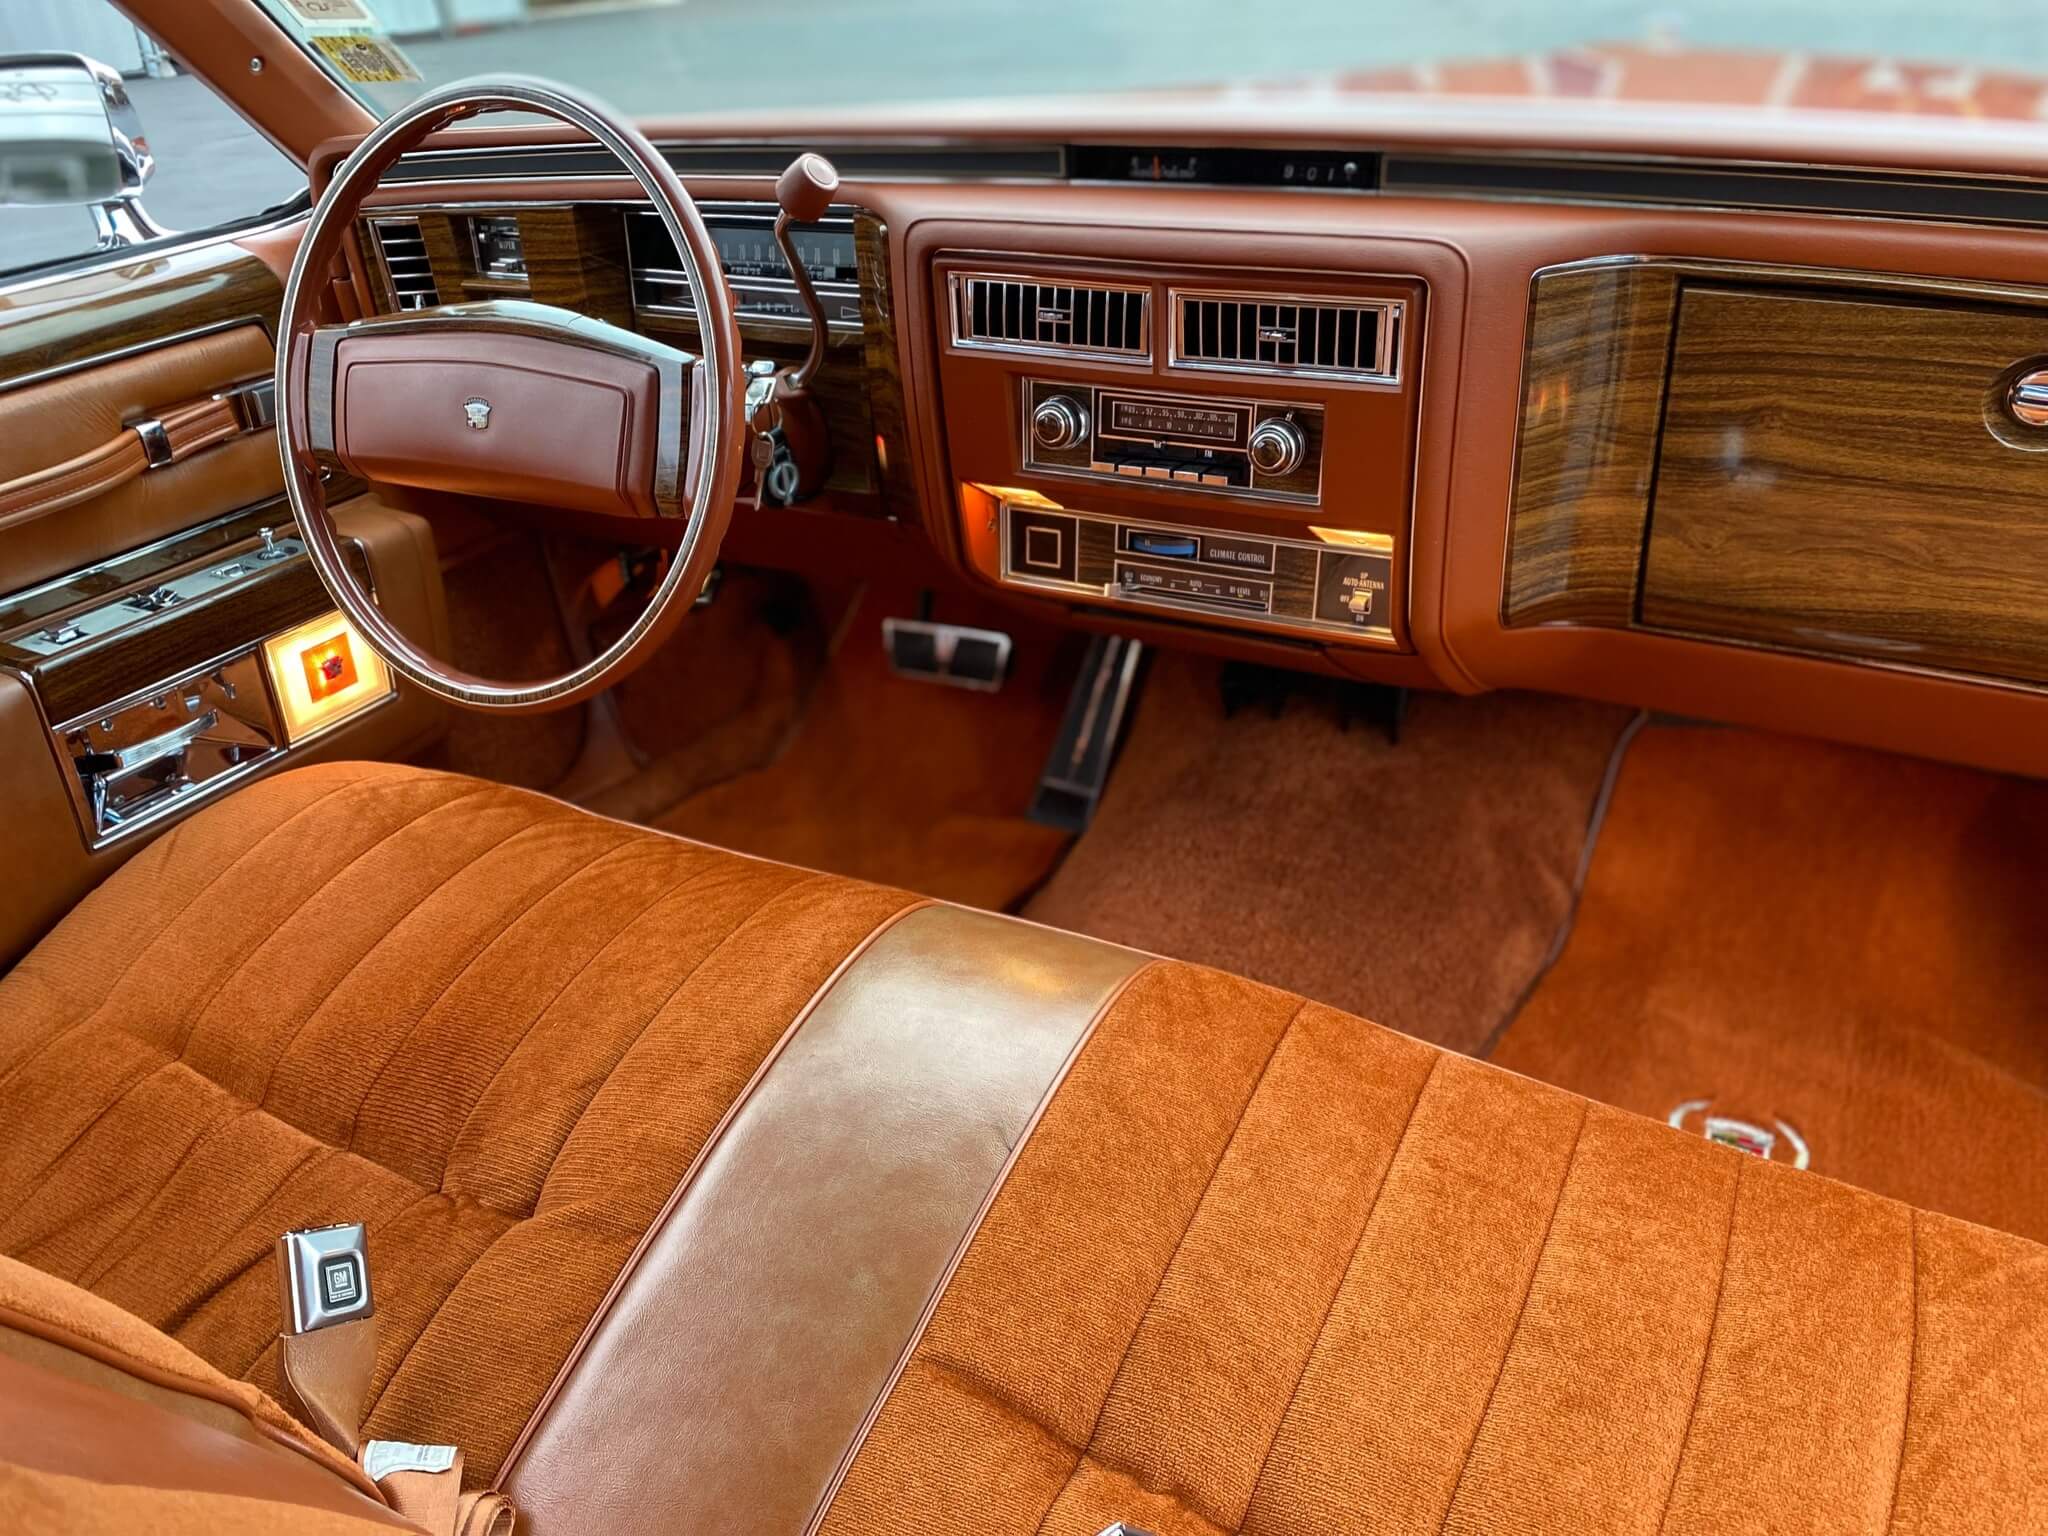 1977 Cadillac Coupe DeVille, cadillac, Cadillac DeVille